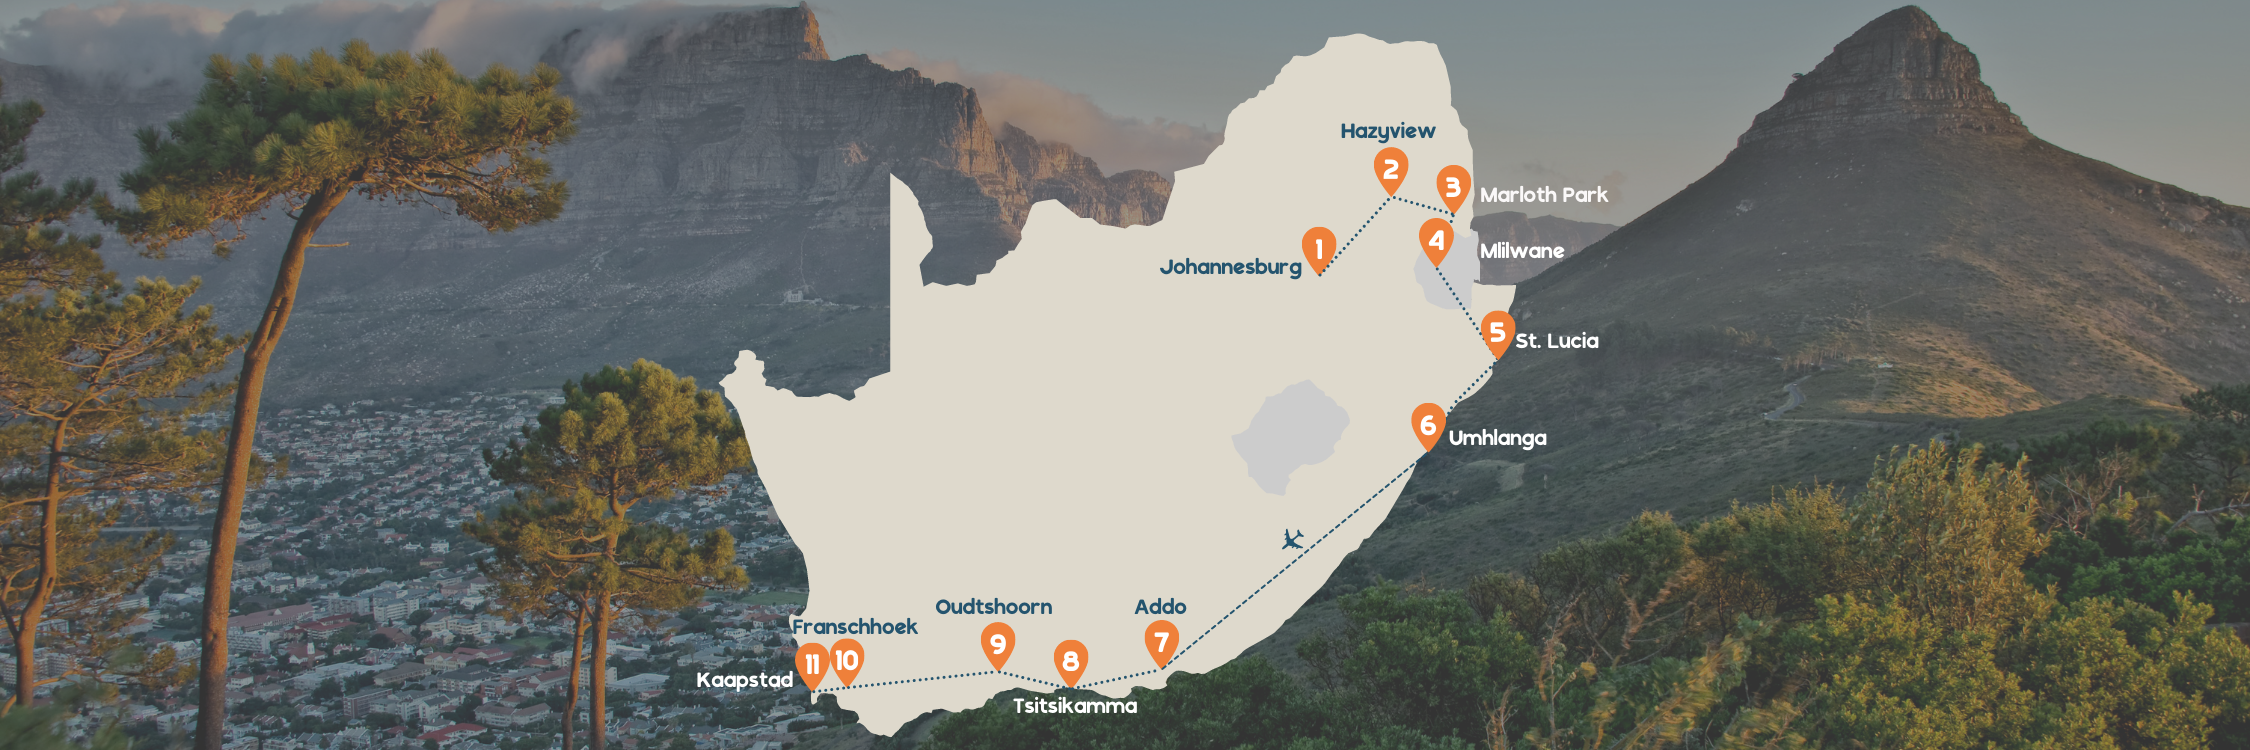 Reisroute kaart rondreis Zuid-Afrika